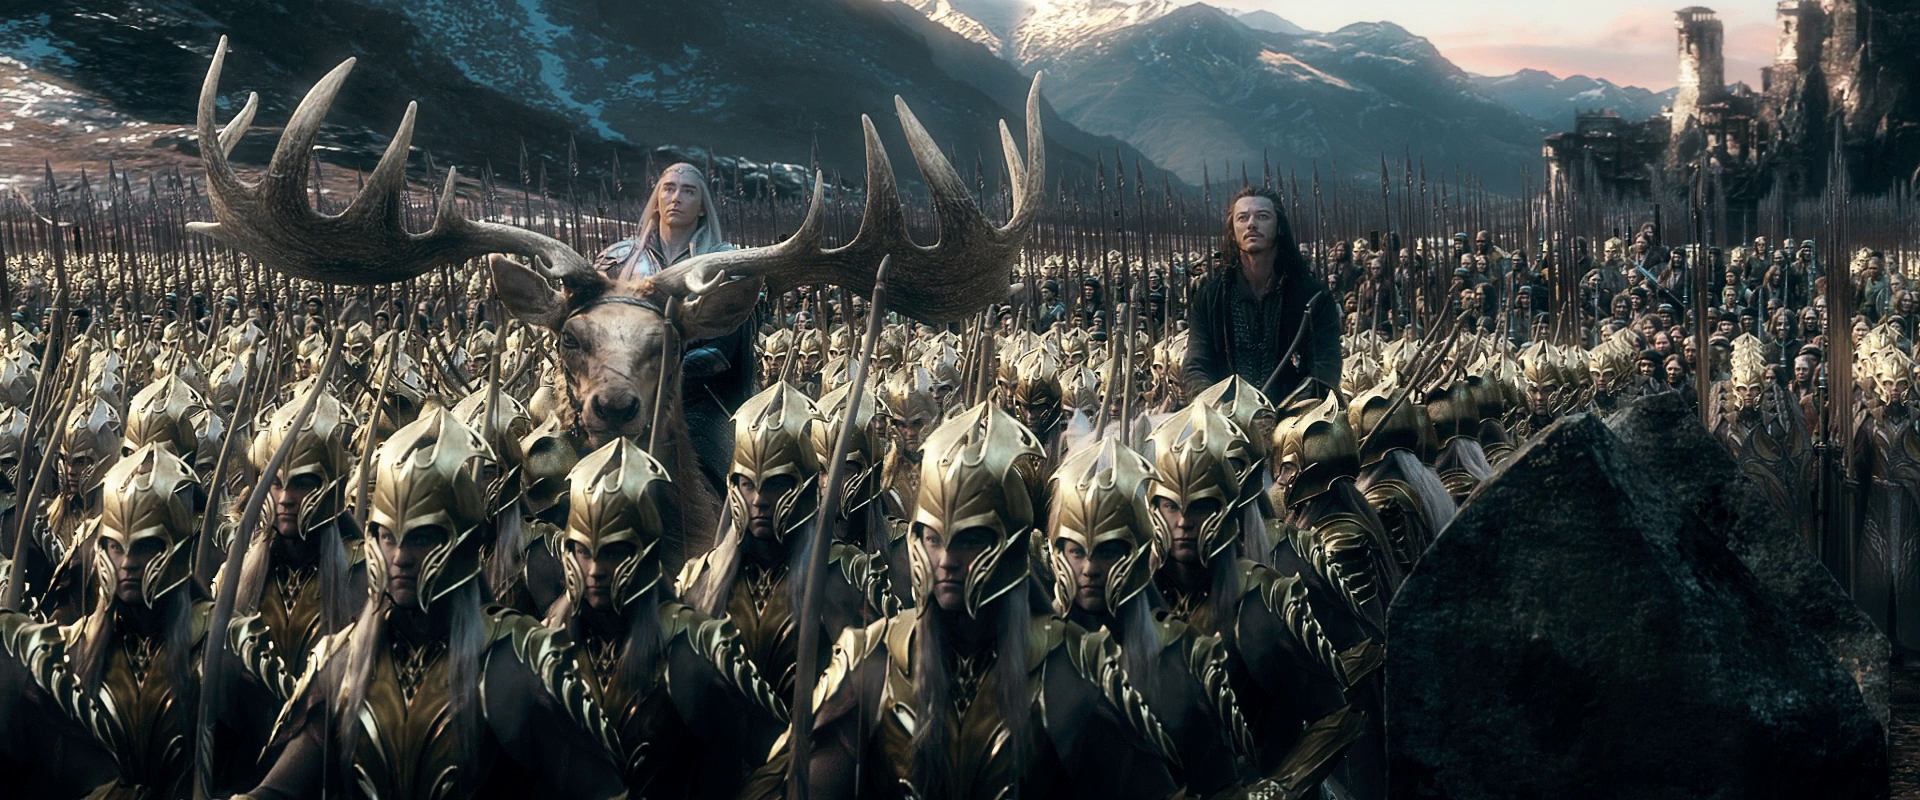 Властелин колец армия. Хоббит битва пяти воинств Саурон. Армия эльфов битва пяти воинств. Трандуил Хоббит битва пяти воинств. Трандуил армия эльфов.